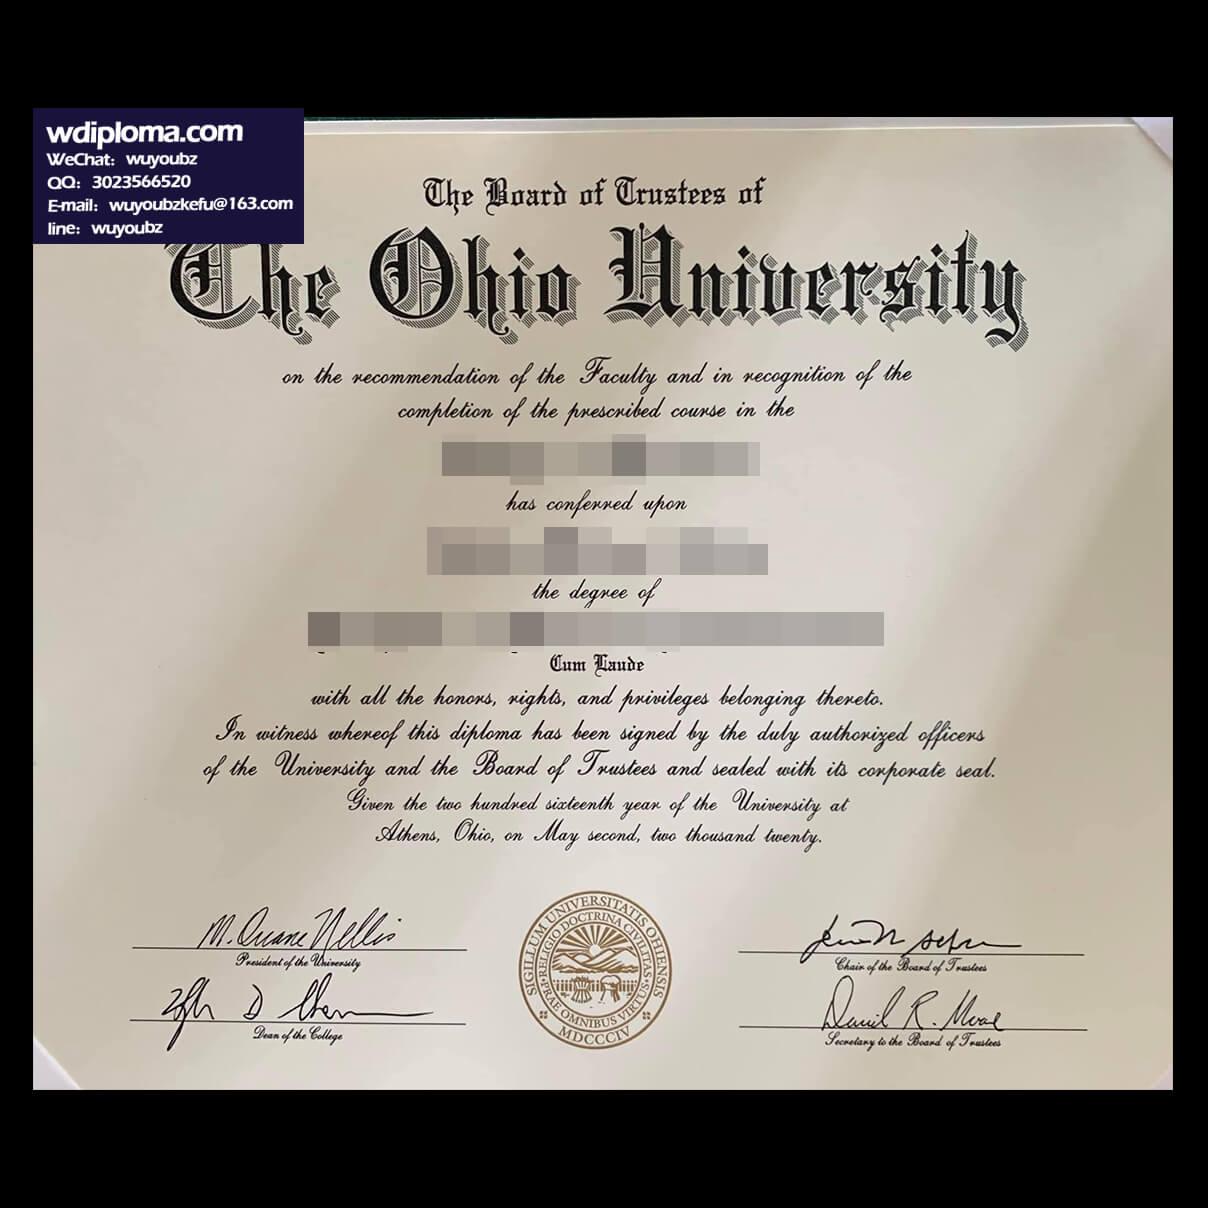 The Ohio State University diploma sample